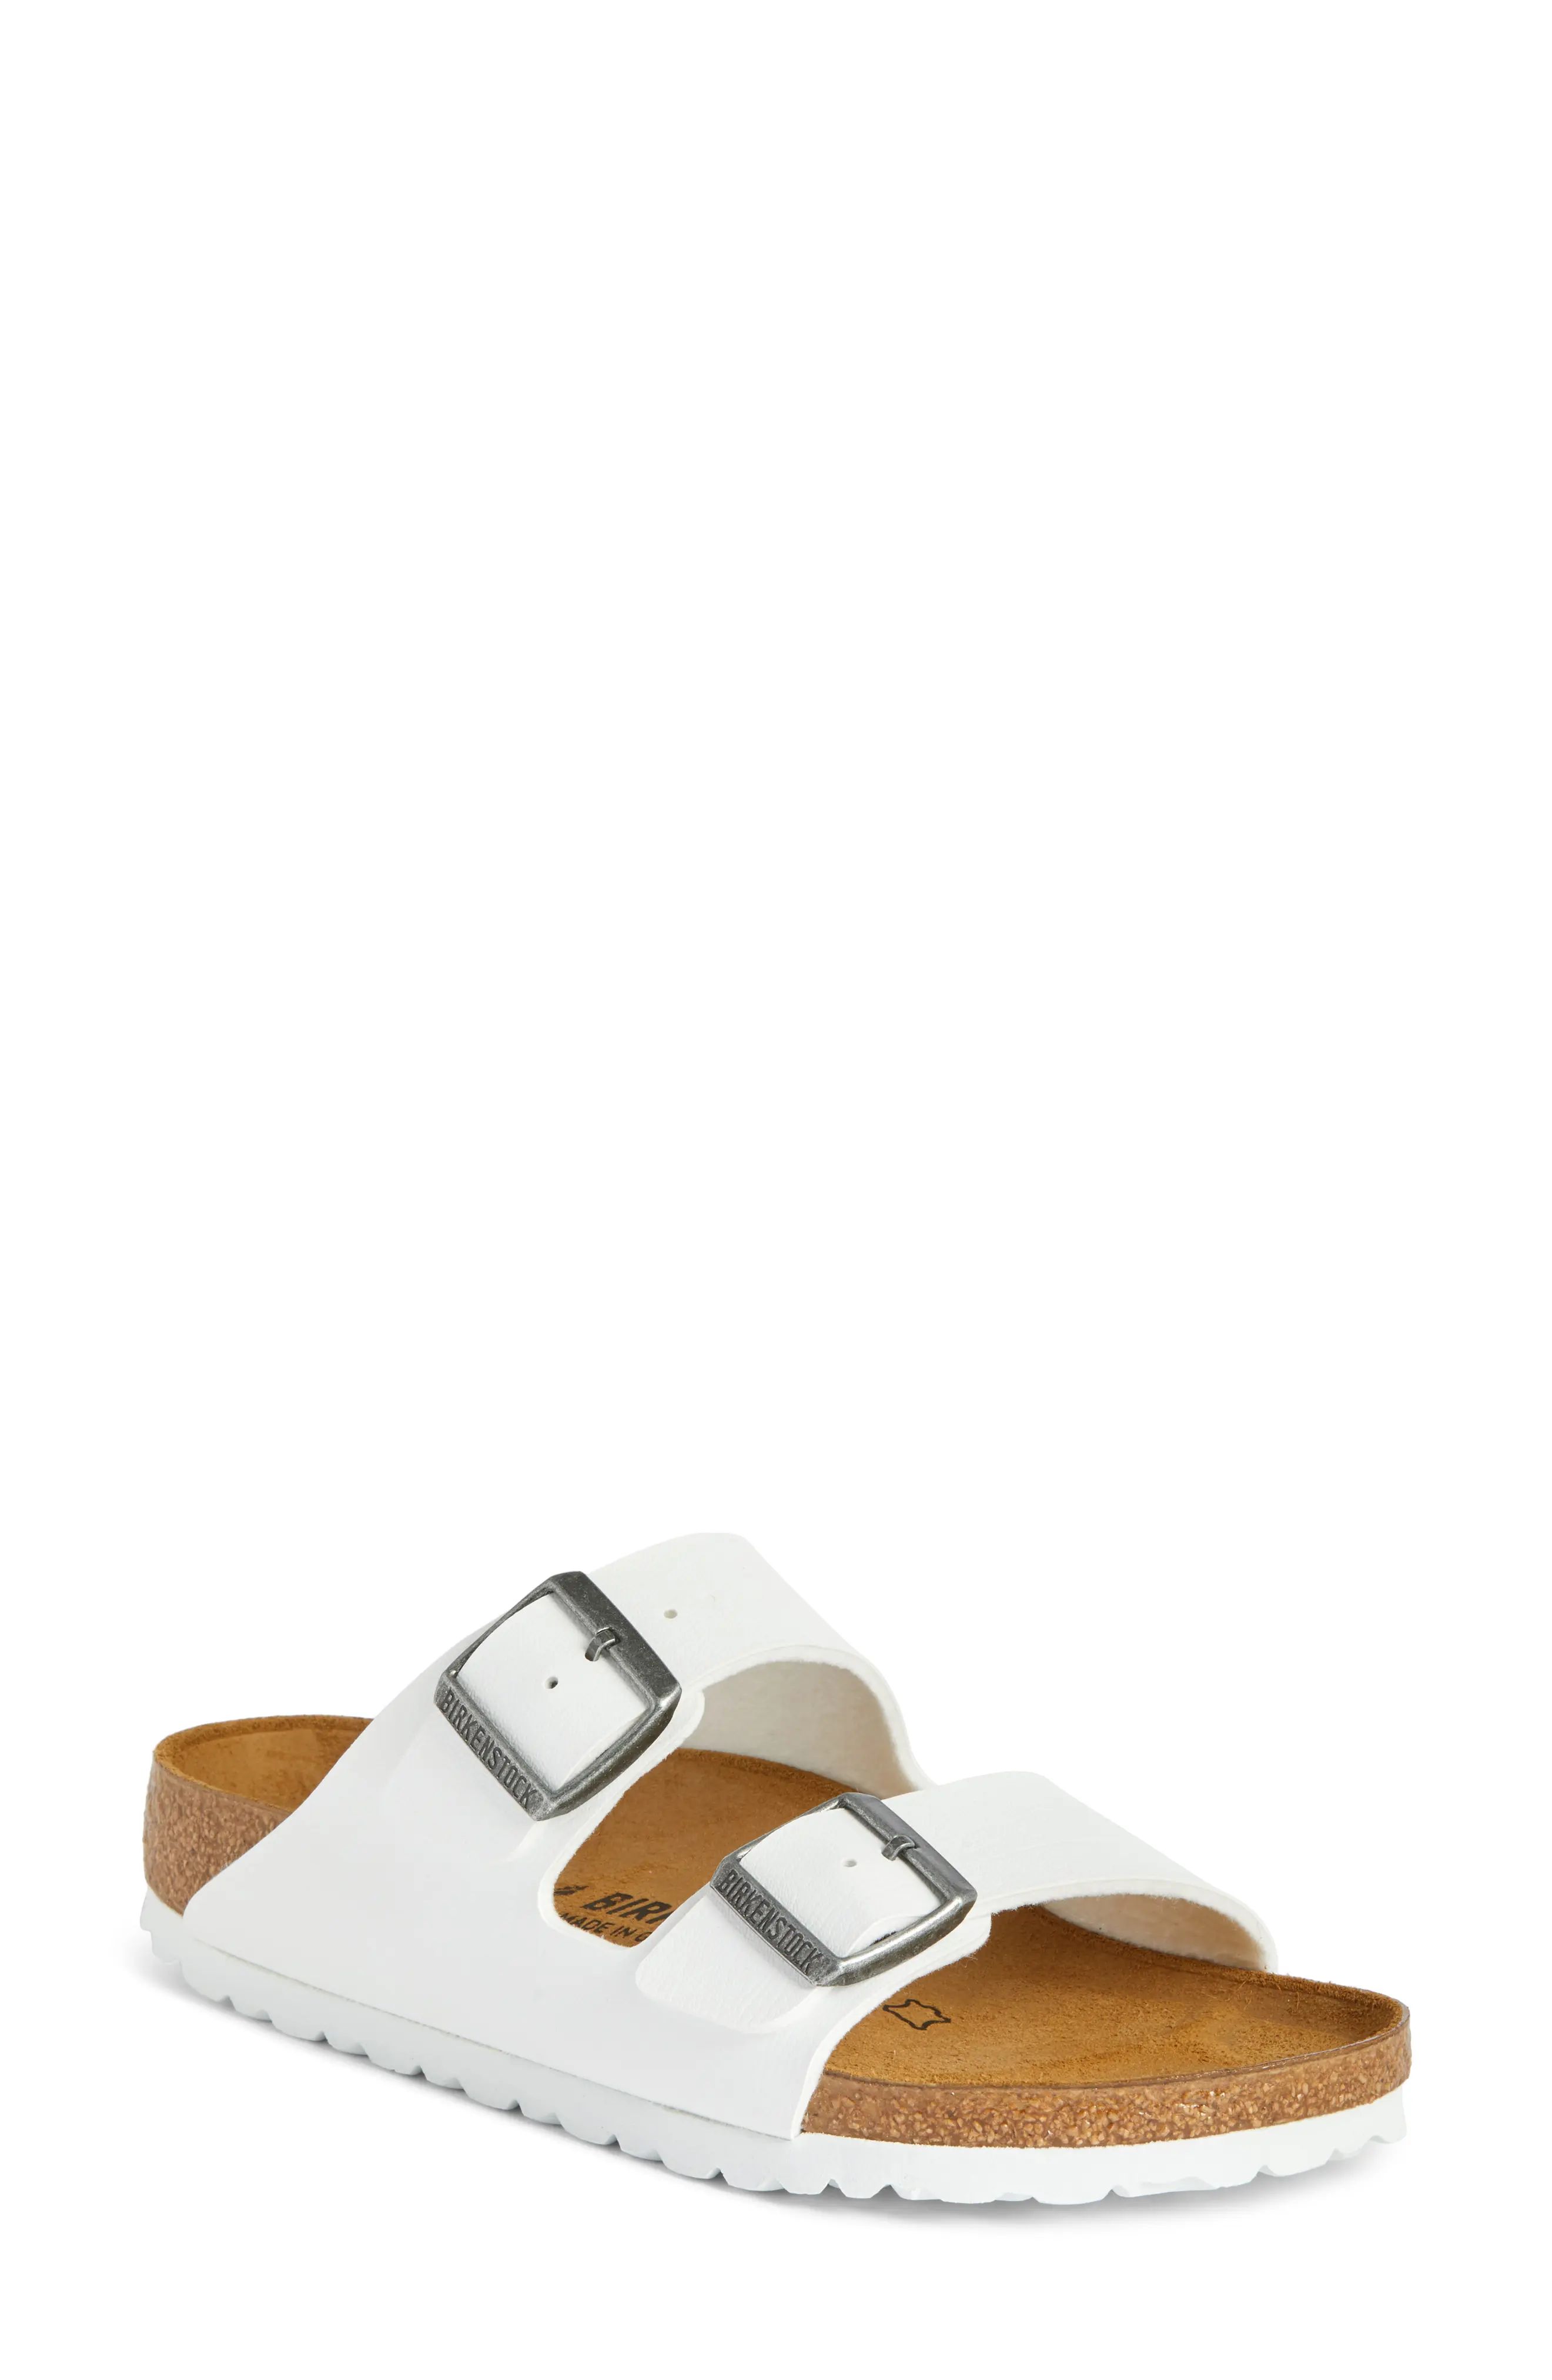 Women's Birkenstock 'Arizona' White Birko-Flor Sandal, Size 5-5.5US / 36EU B - White | Nordstrom